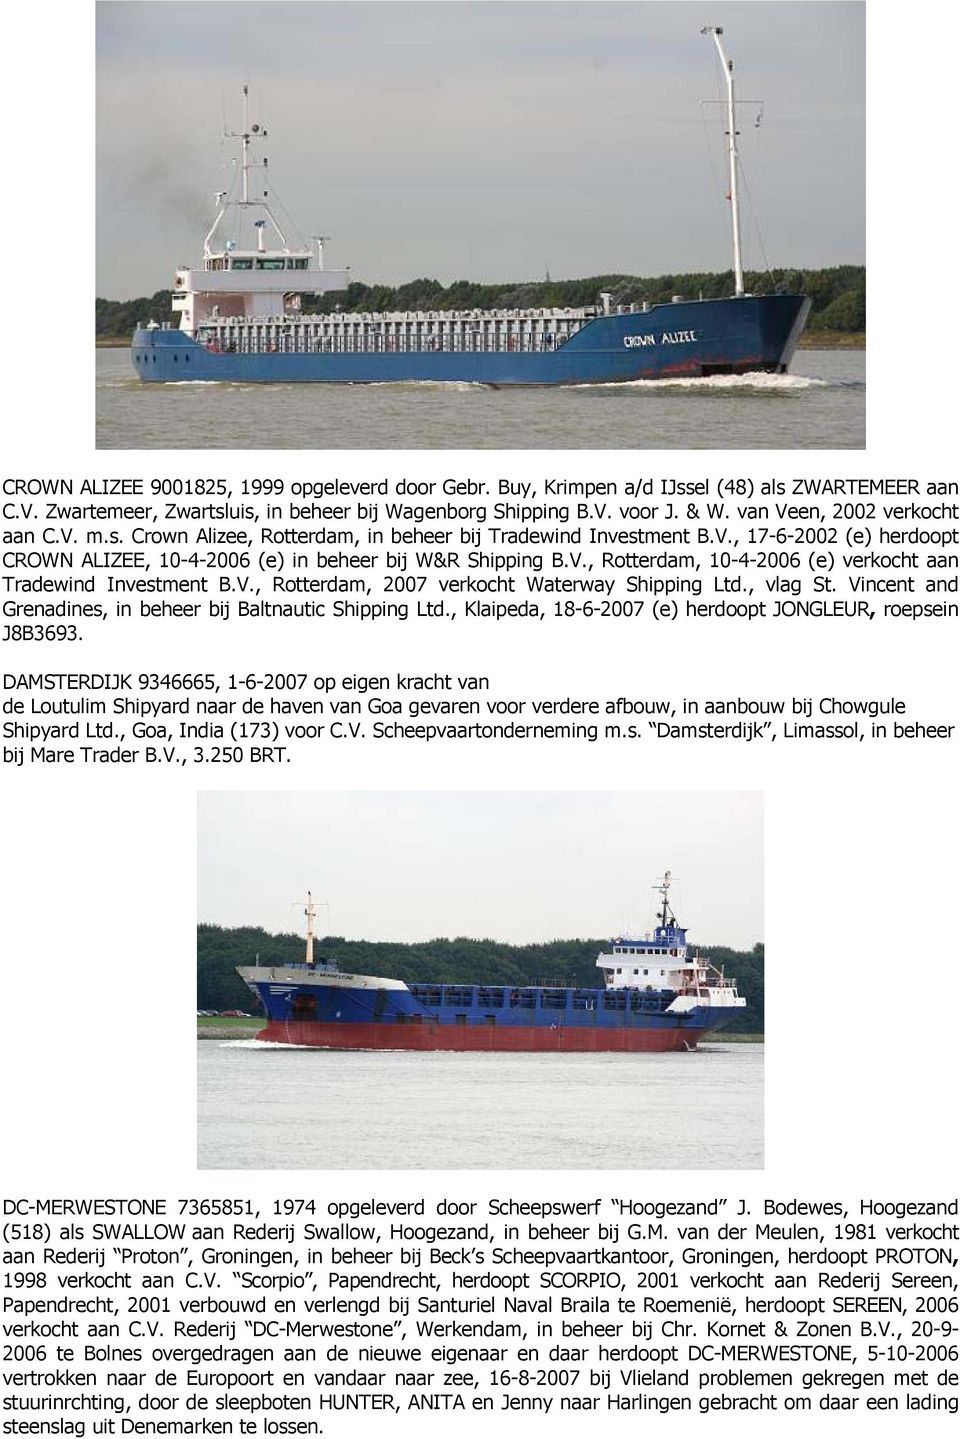 V., Rotterdam, 2007 verkocht Waterway Shipping Ltd., vlag St. Vincent and Grenadines, in beheer bij Baltnautic Shipping Ltd., Klaipeda, 18-6-2007 (e) herdoopt JONGLEUR, roepsein J8B3693.